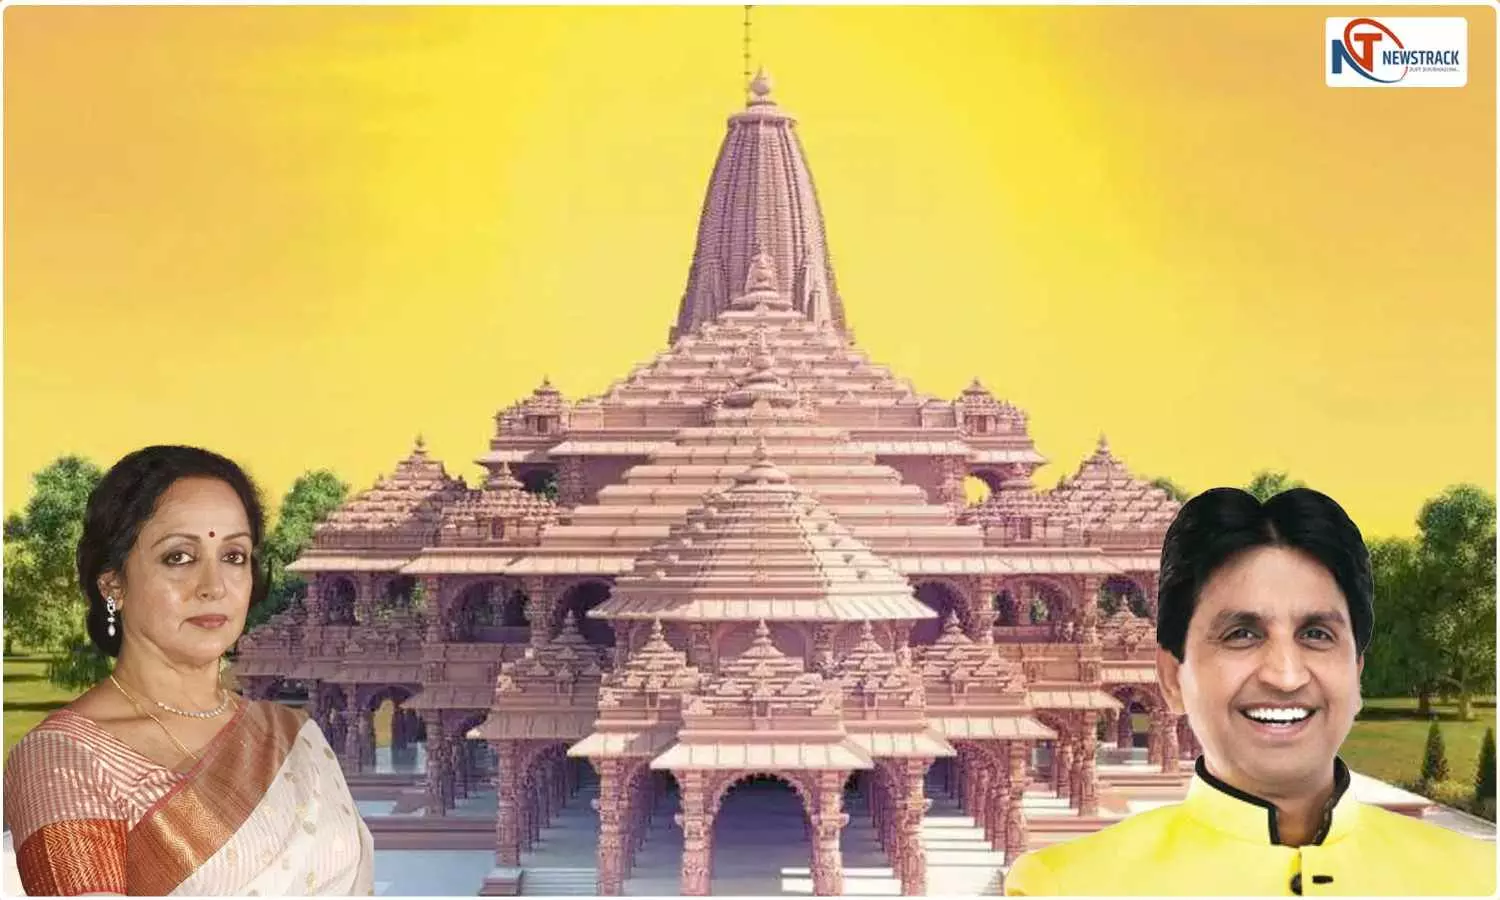 Ayodhya News